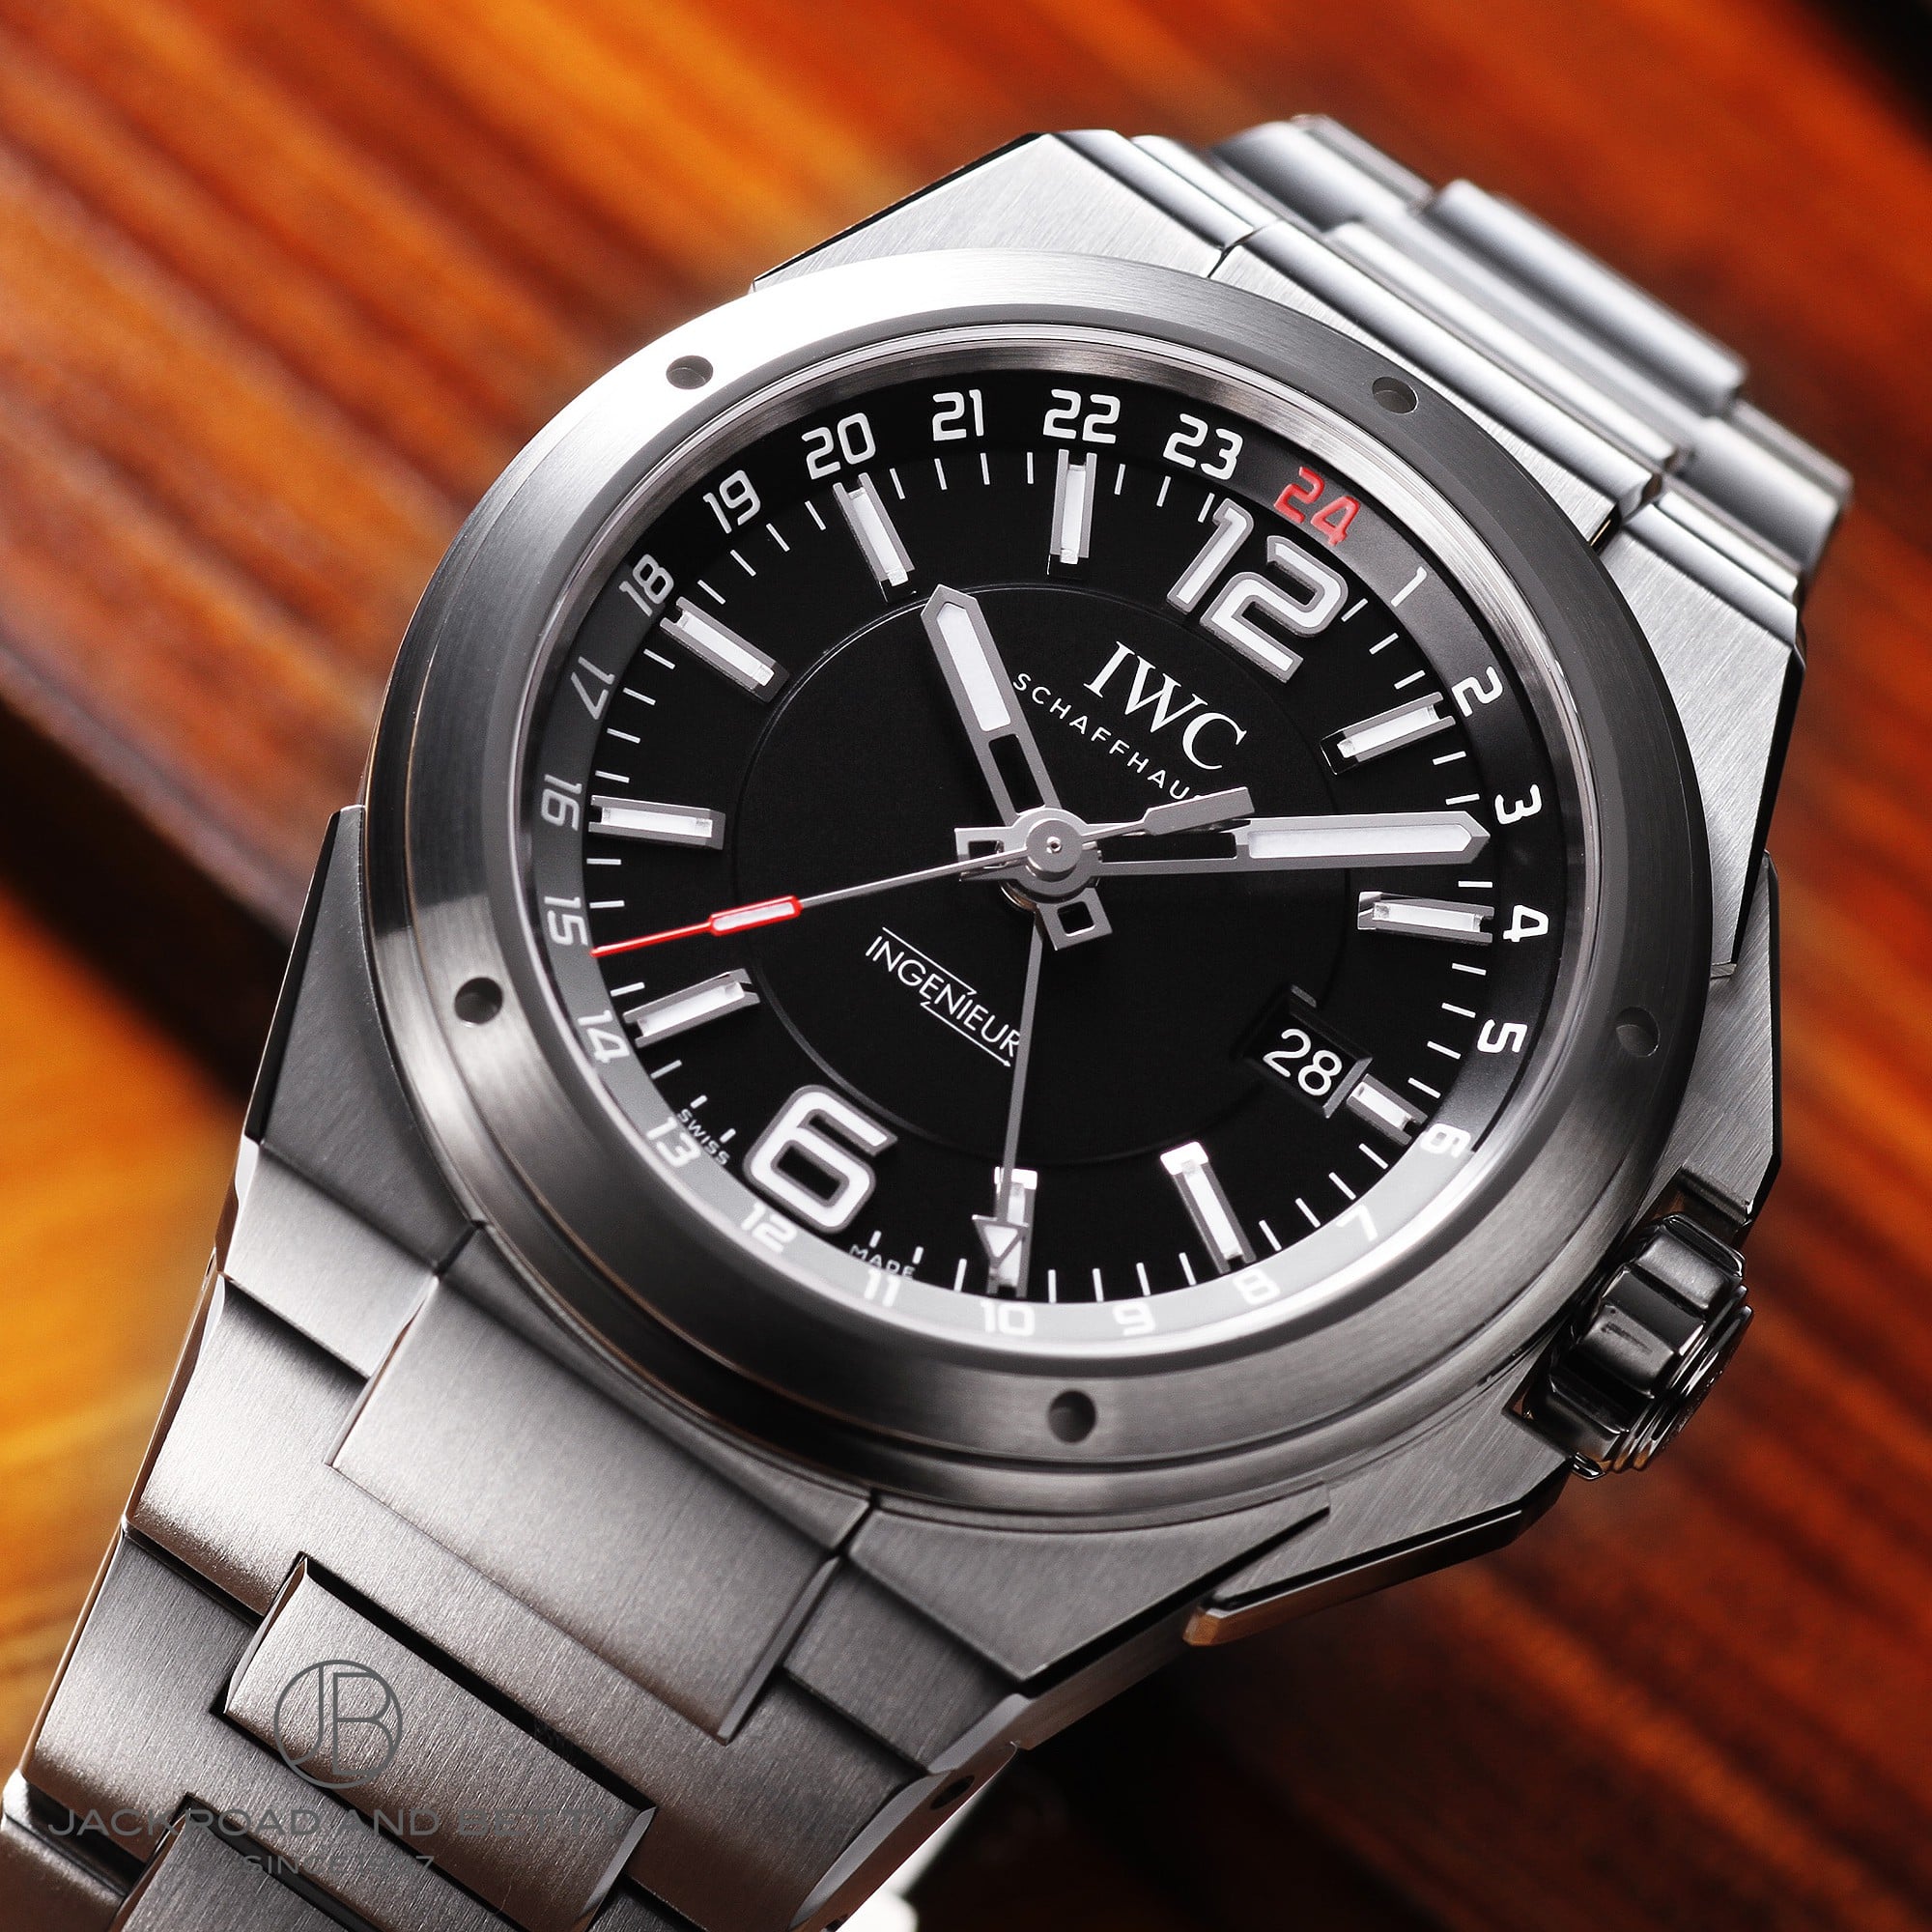 iwc インヂュニアデュアルタイム黒腕時計(アナログ) - 腕時計(アナログ)